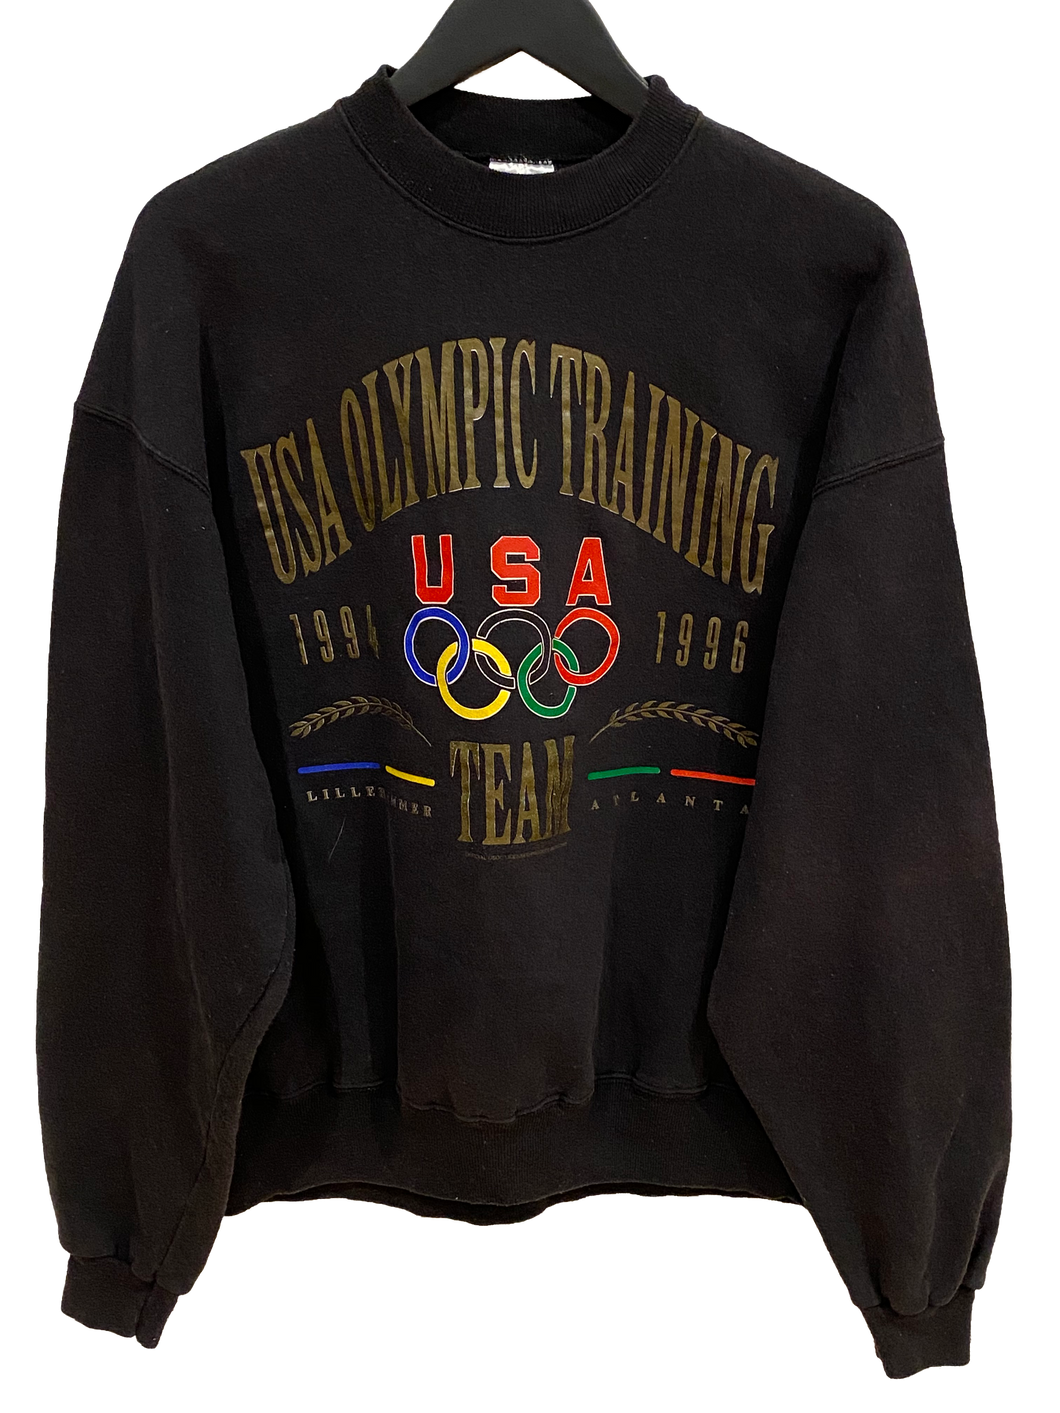 VINTAGE 1996 USA OLYMPIC JUMPER - LARGE